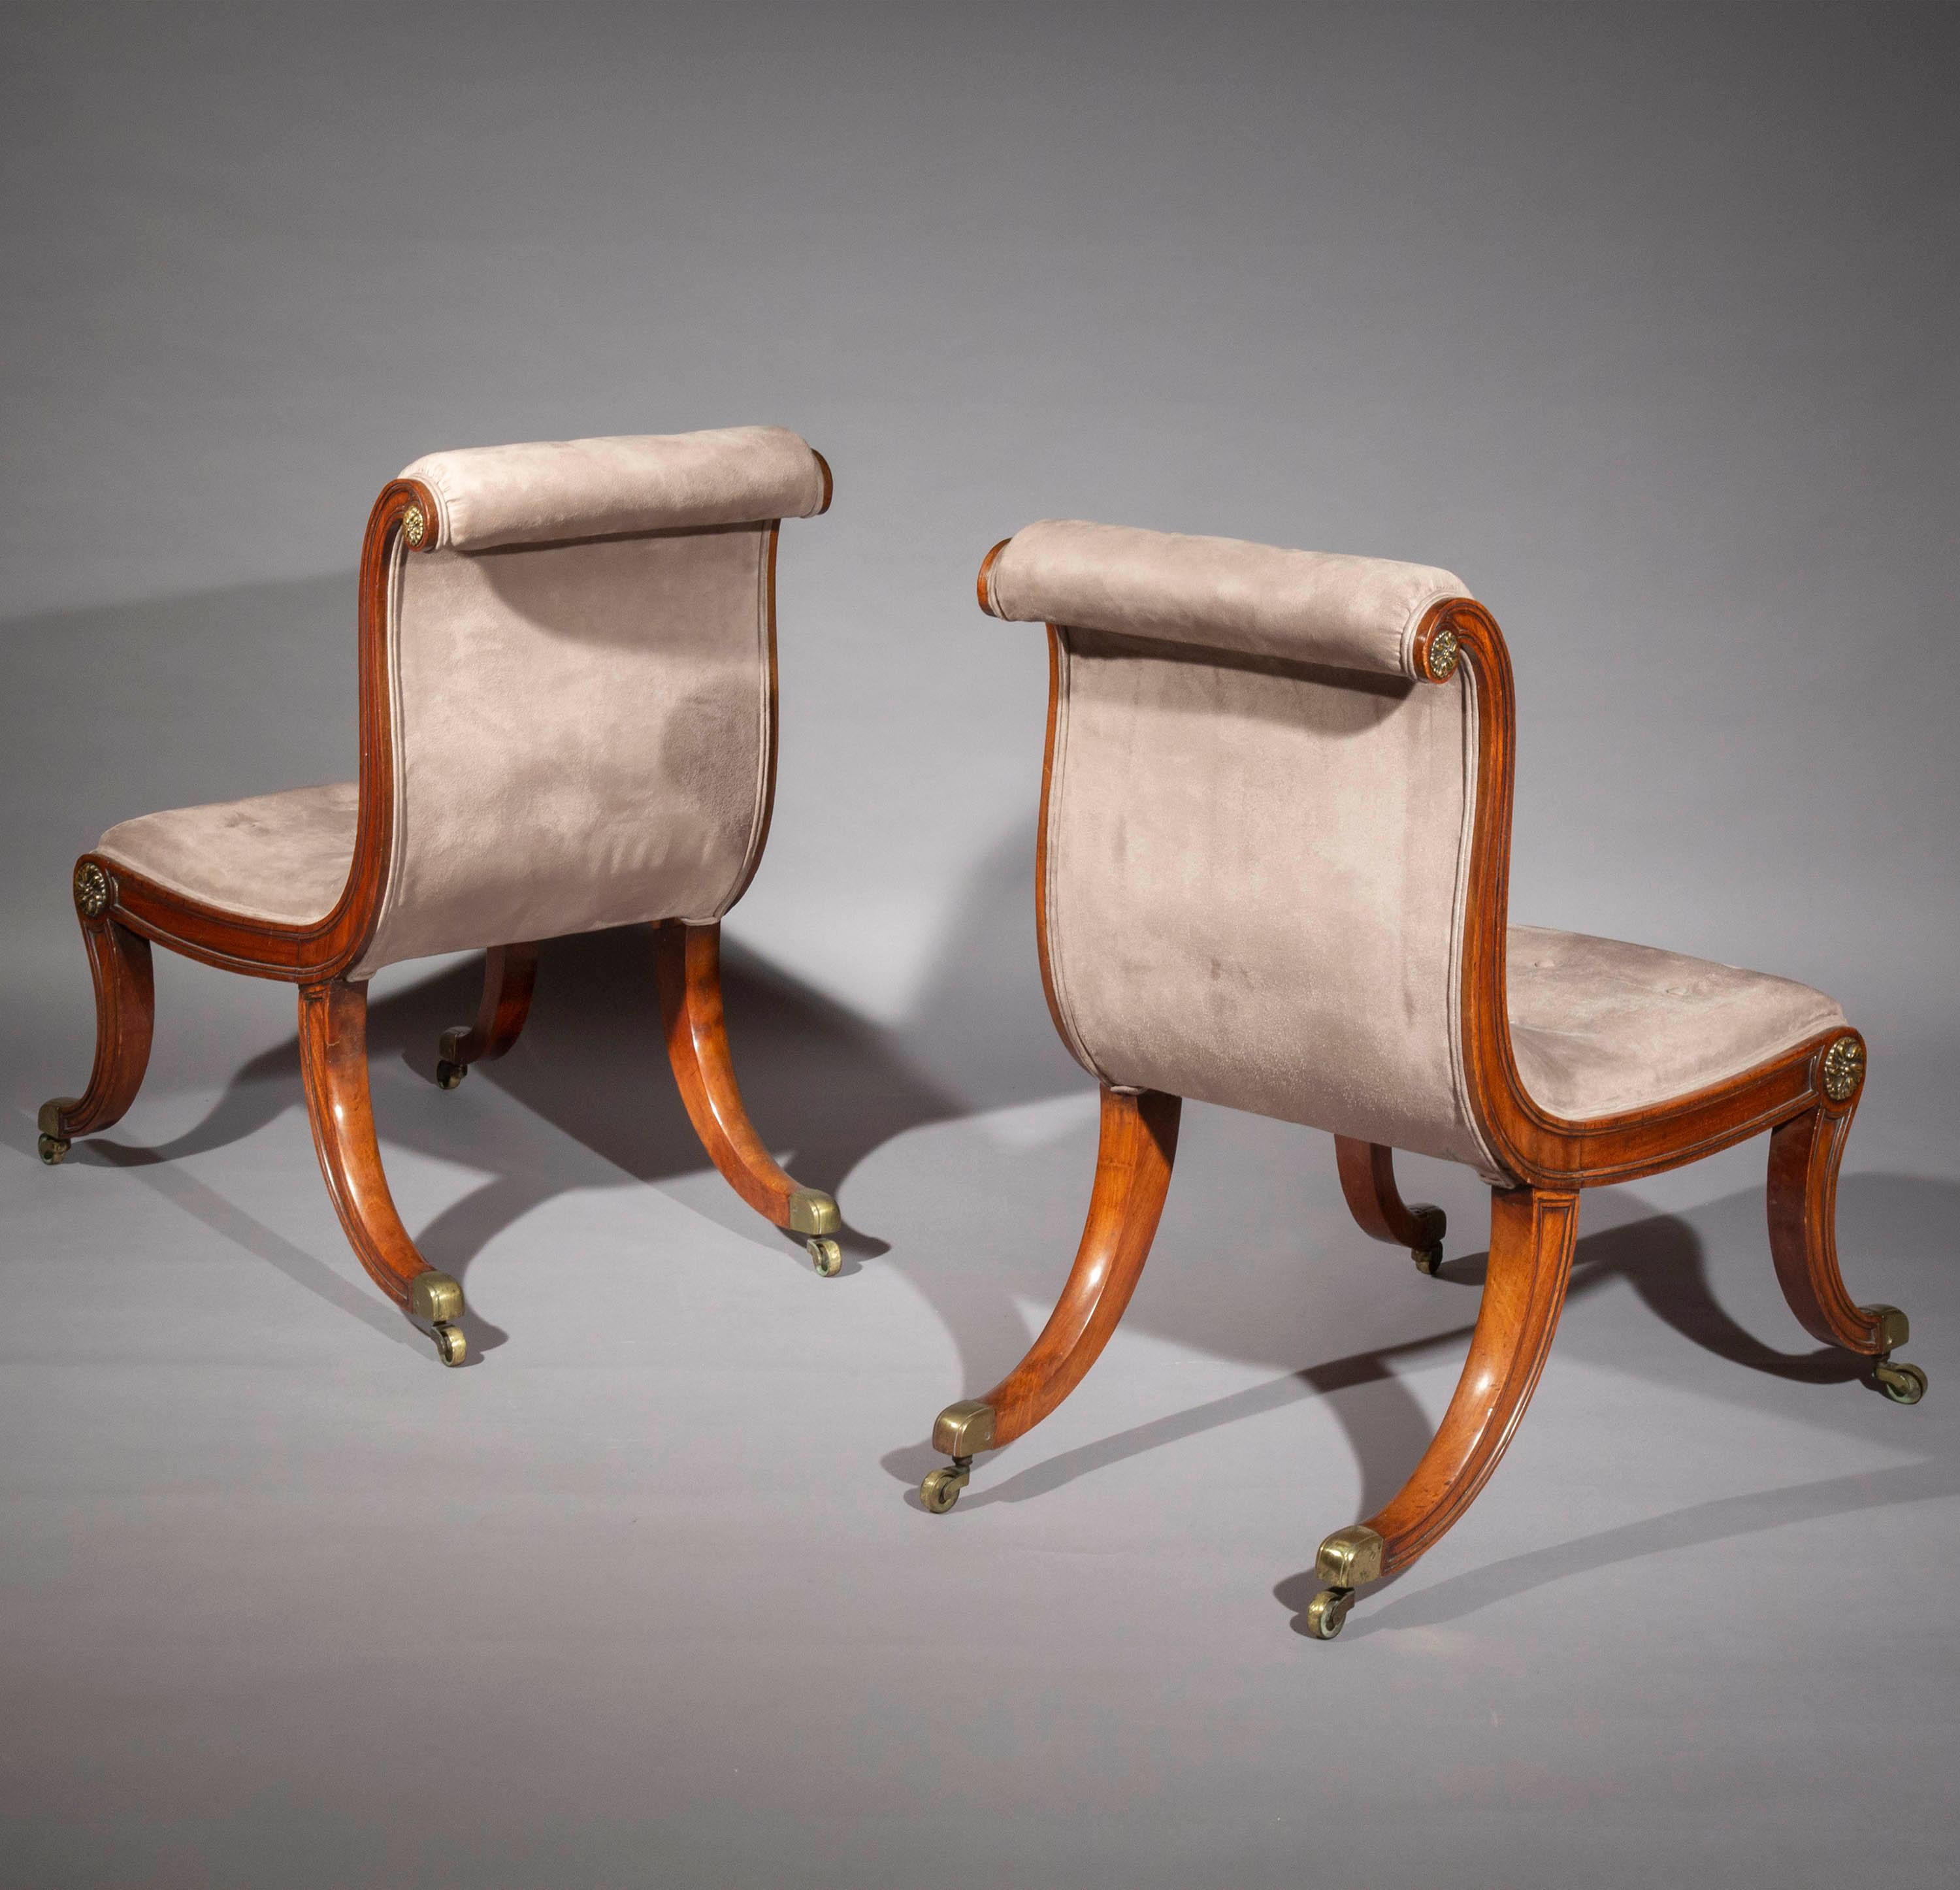 19th Century Pair of Antique Regency Klismos Chairs, Designed by Thomas Hope